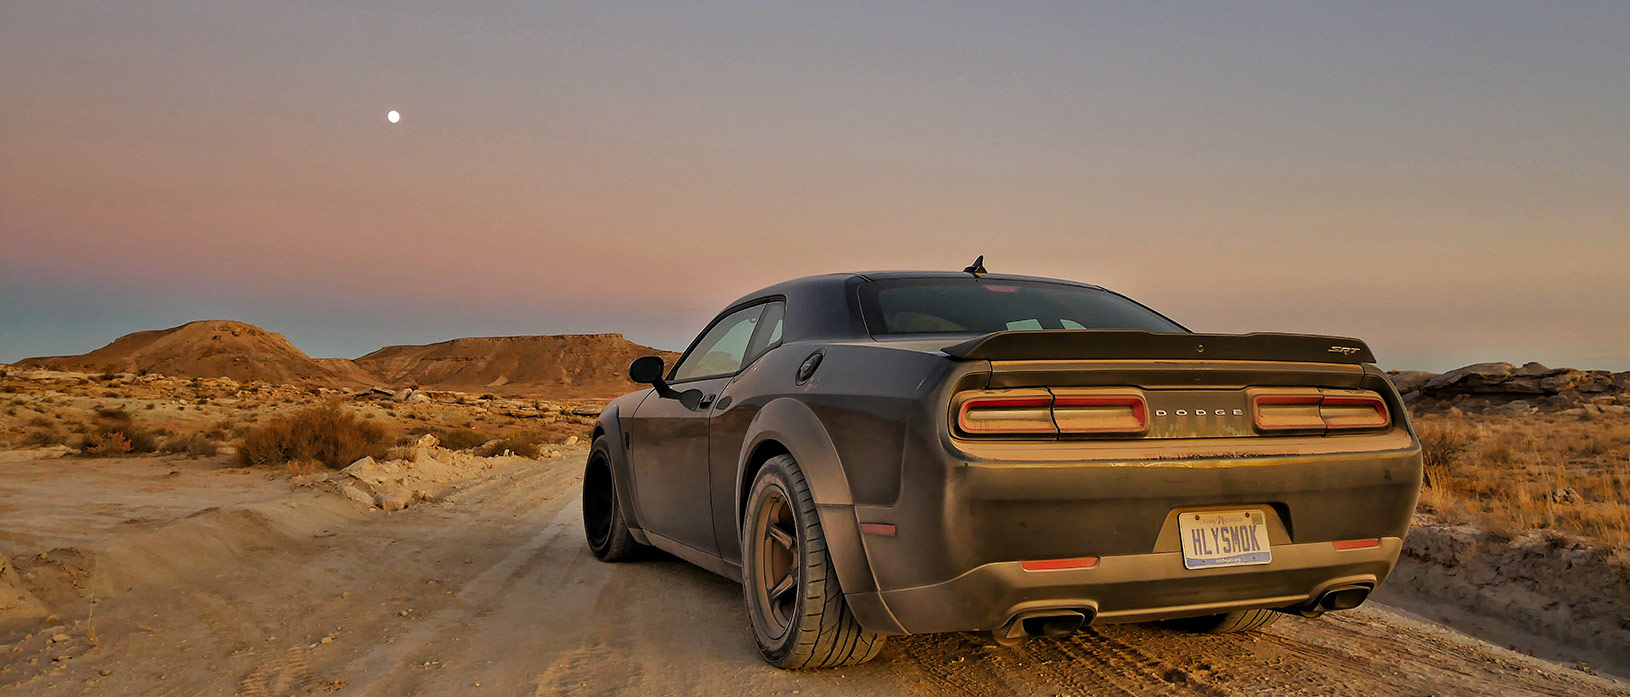 dirty Challenger SRT Demon on a dirt road